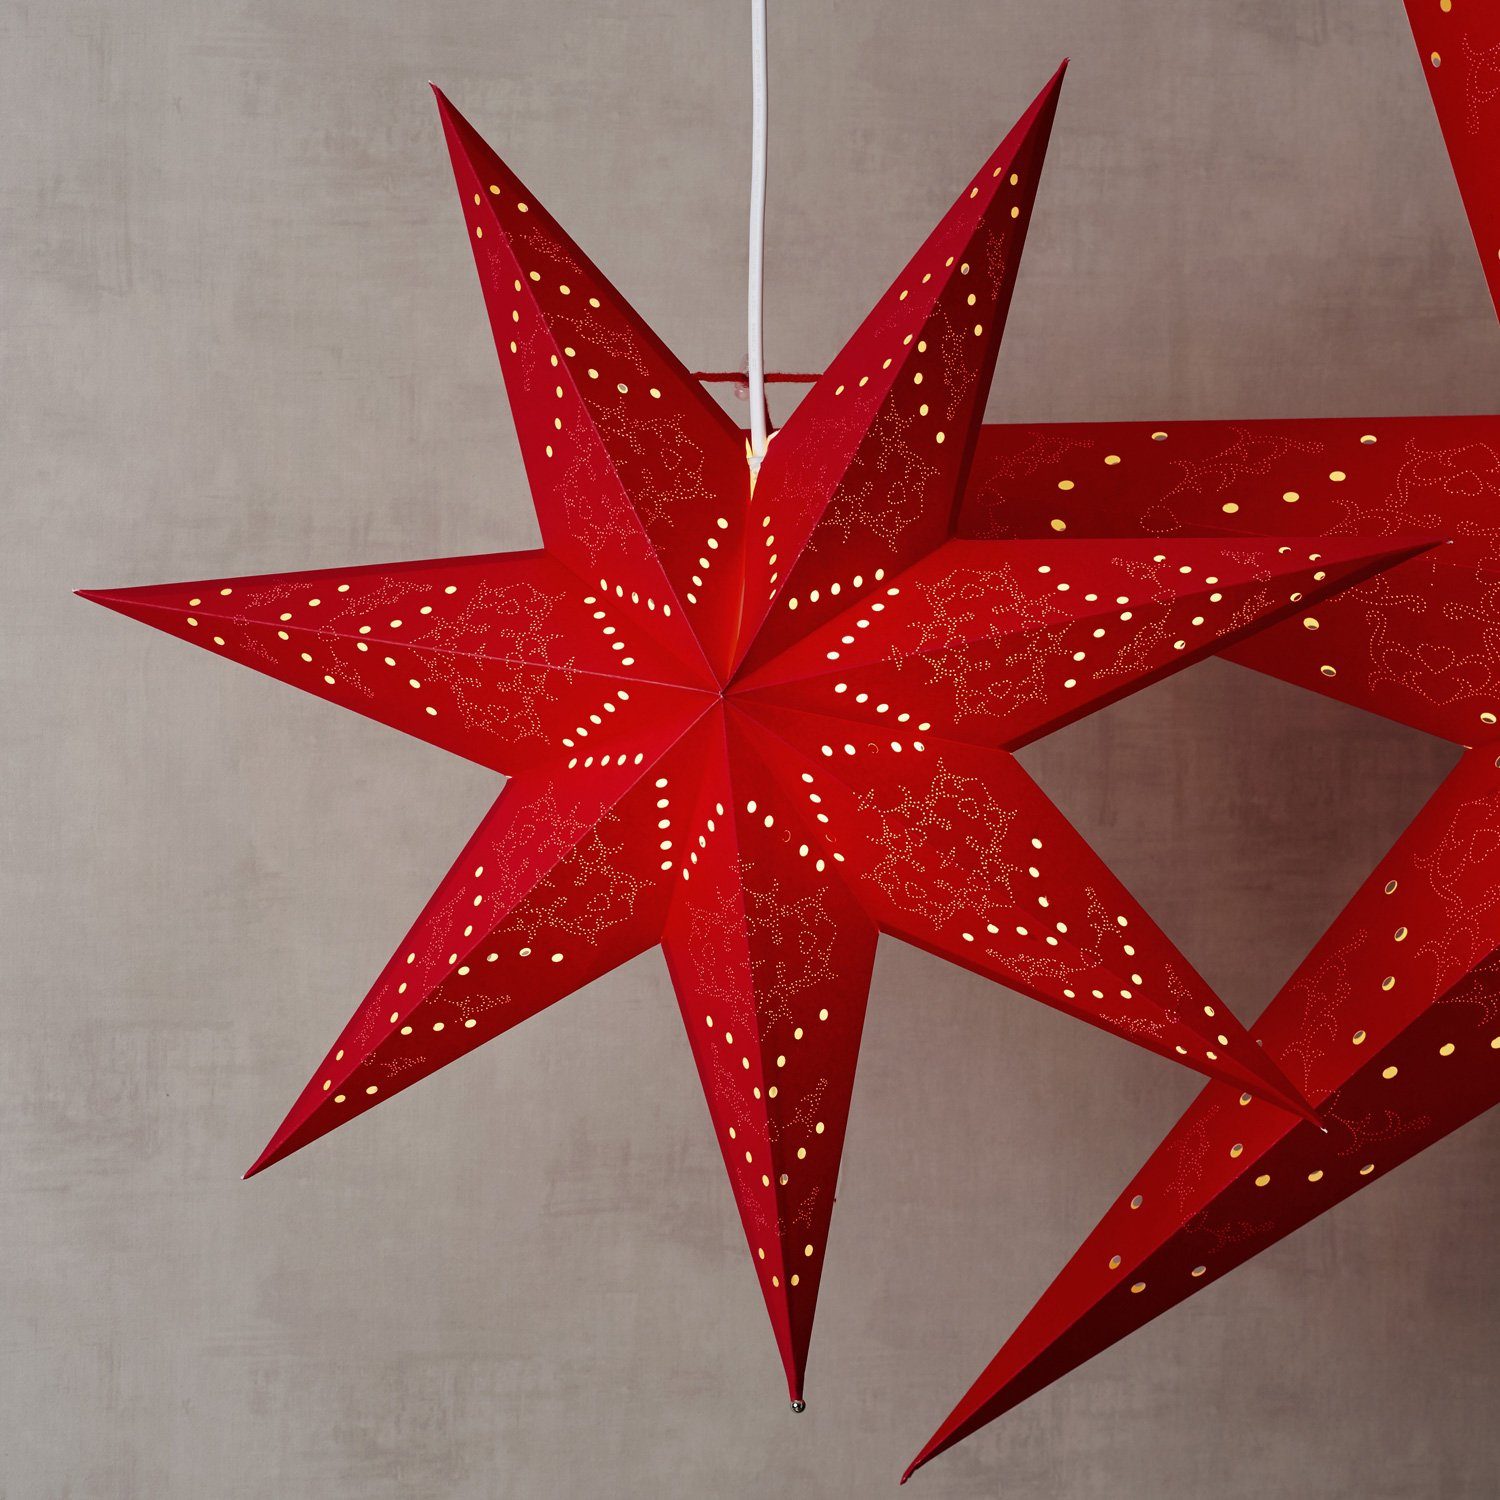 TRADING 51cm Papierstern STAR Leuchtstern Faltstern rot Kabel hängend LED mit 7-zackig Stern